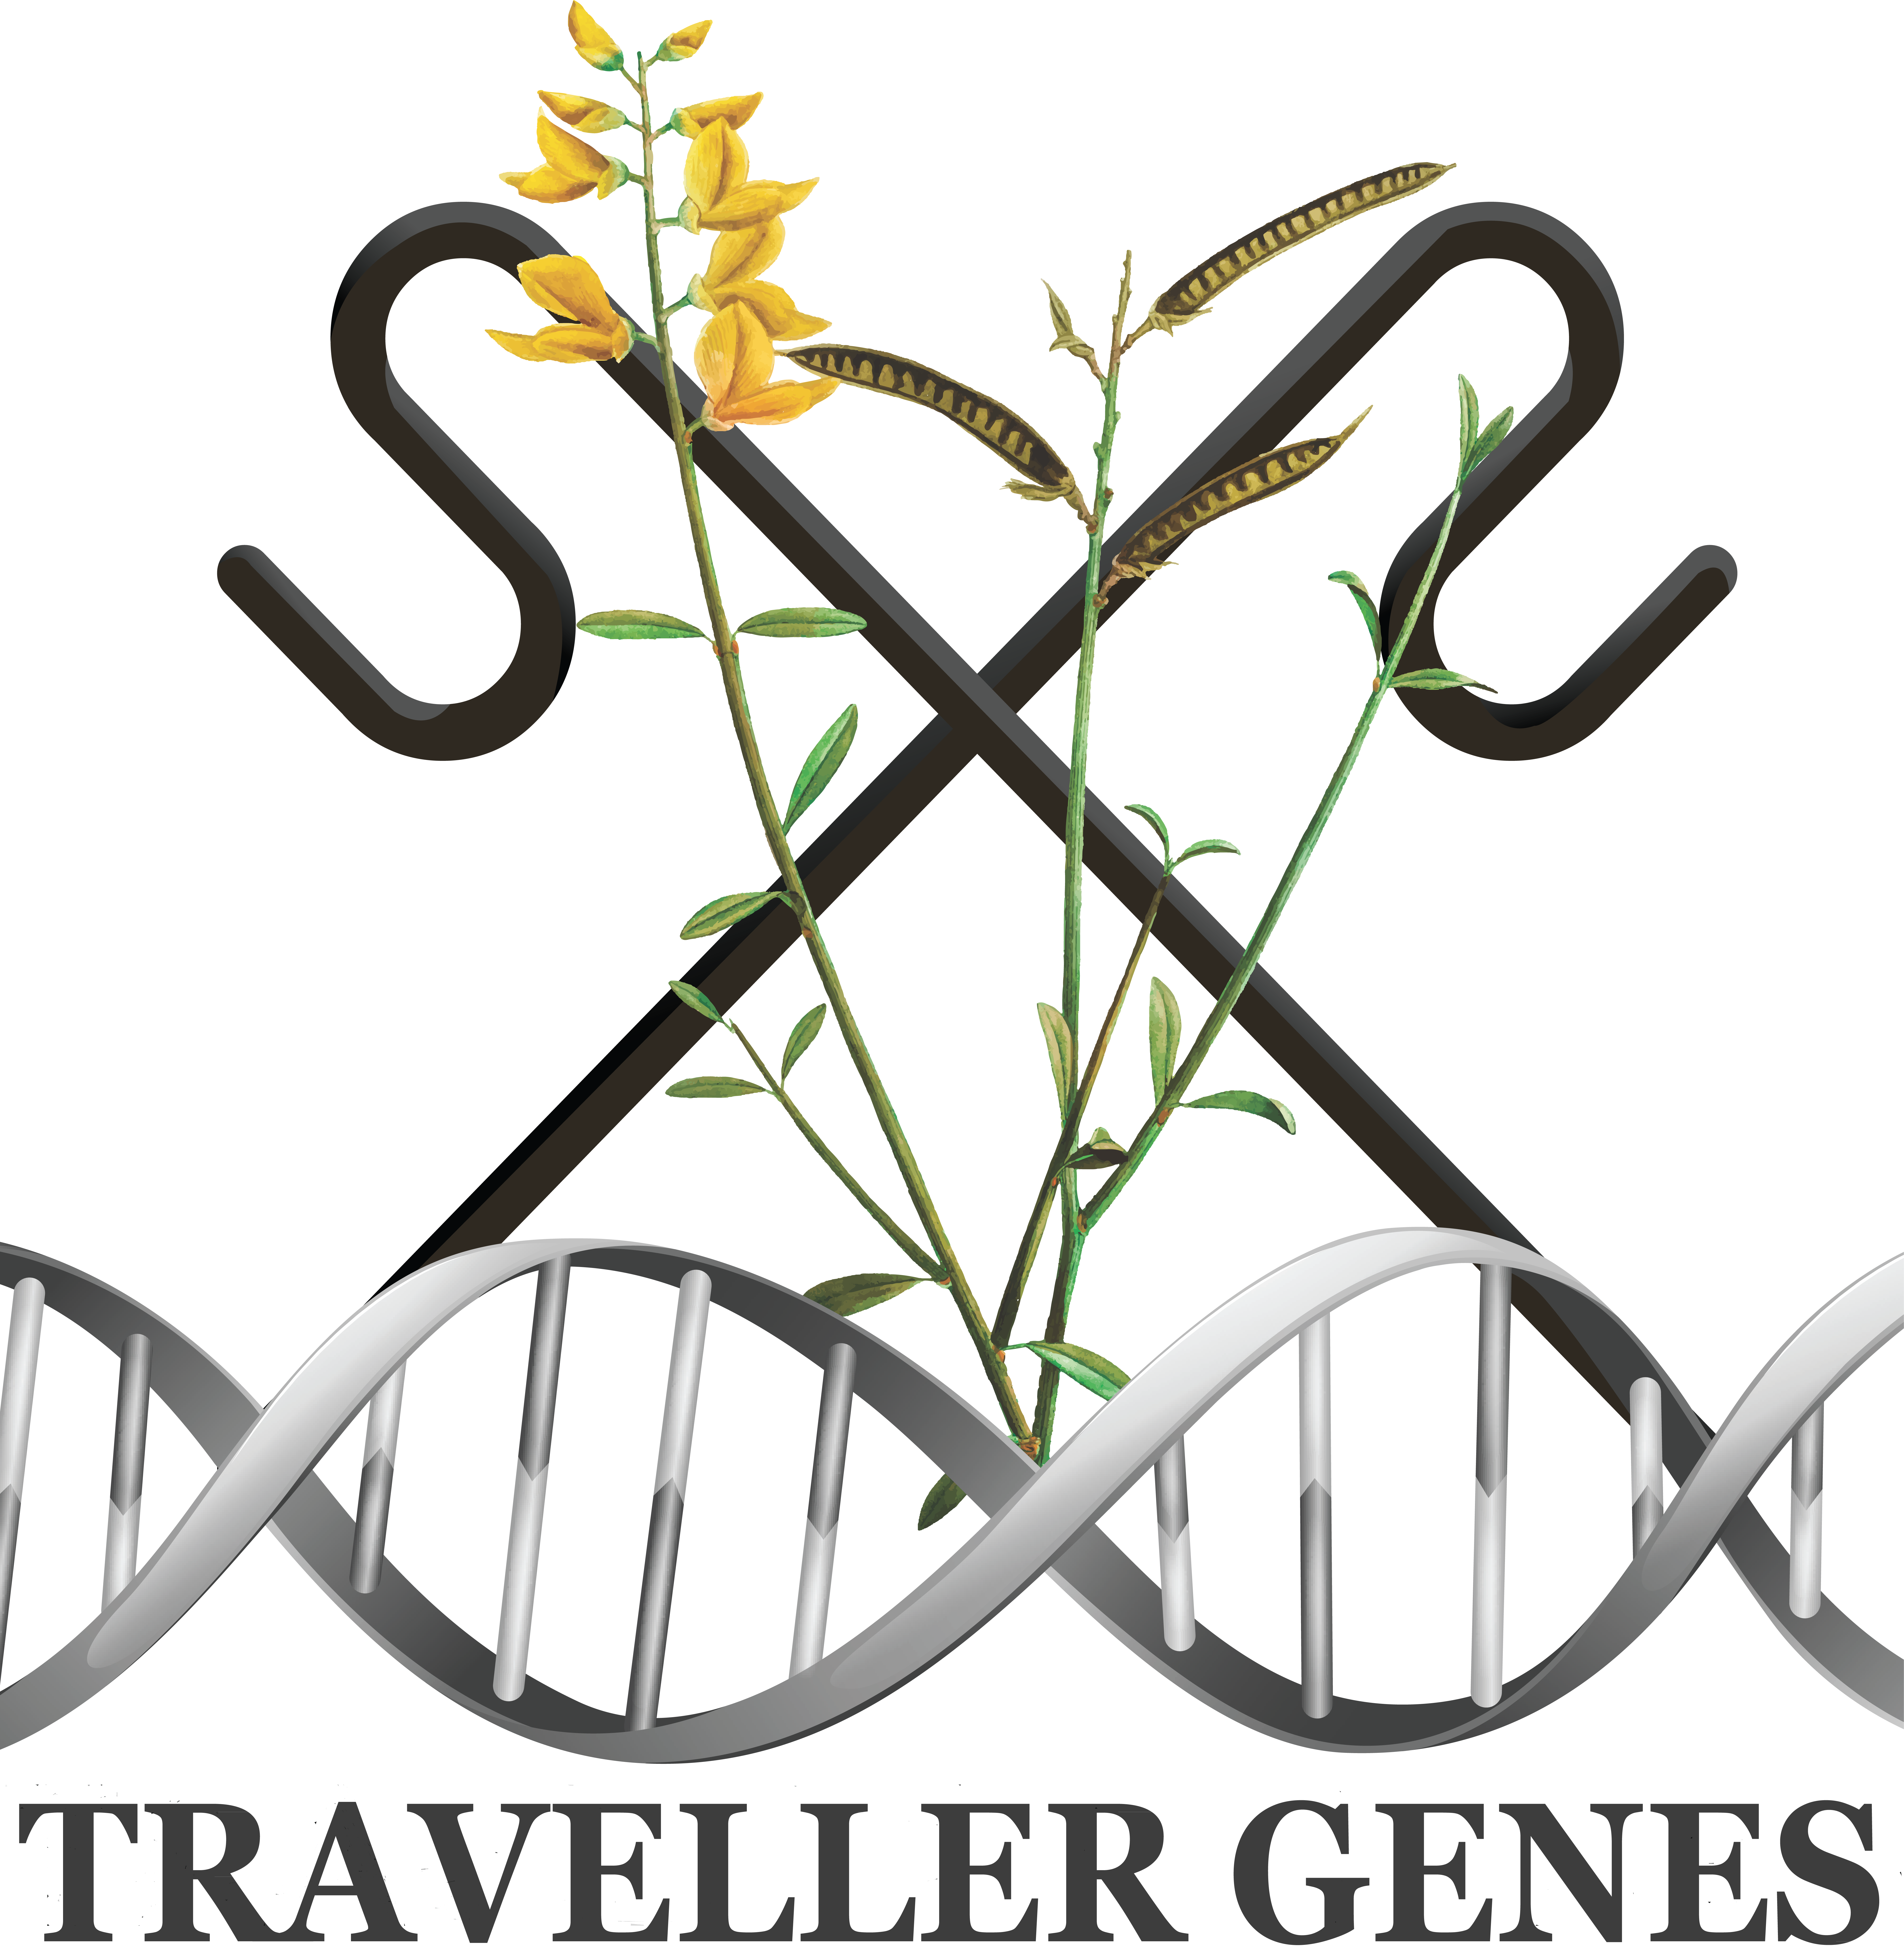 Crops and handles extending from DNA. Traveller Genes written underneath.